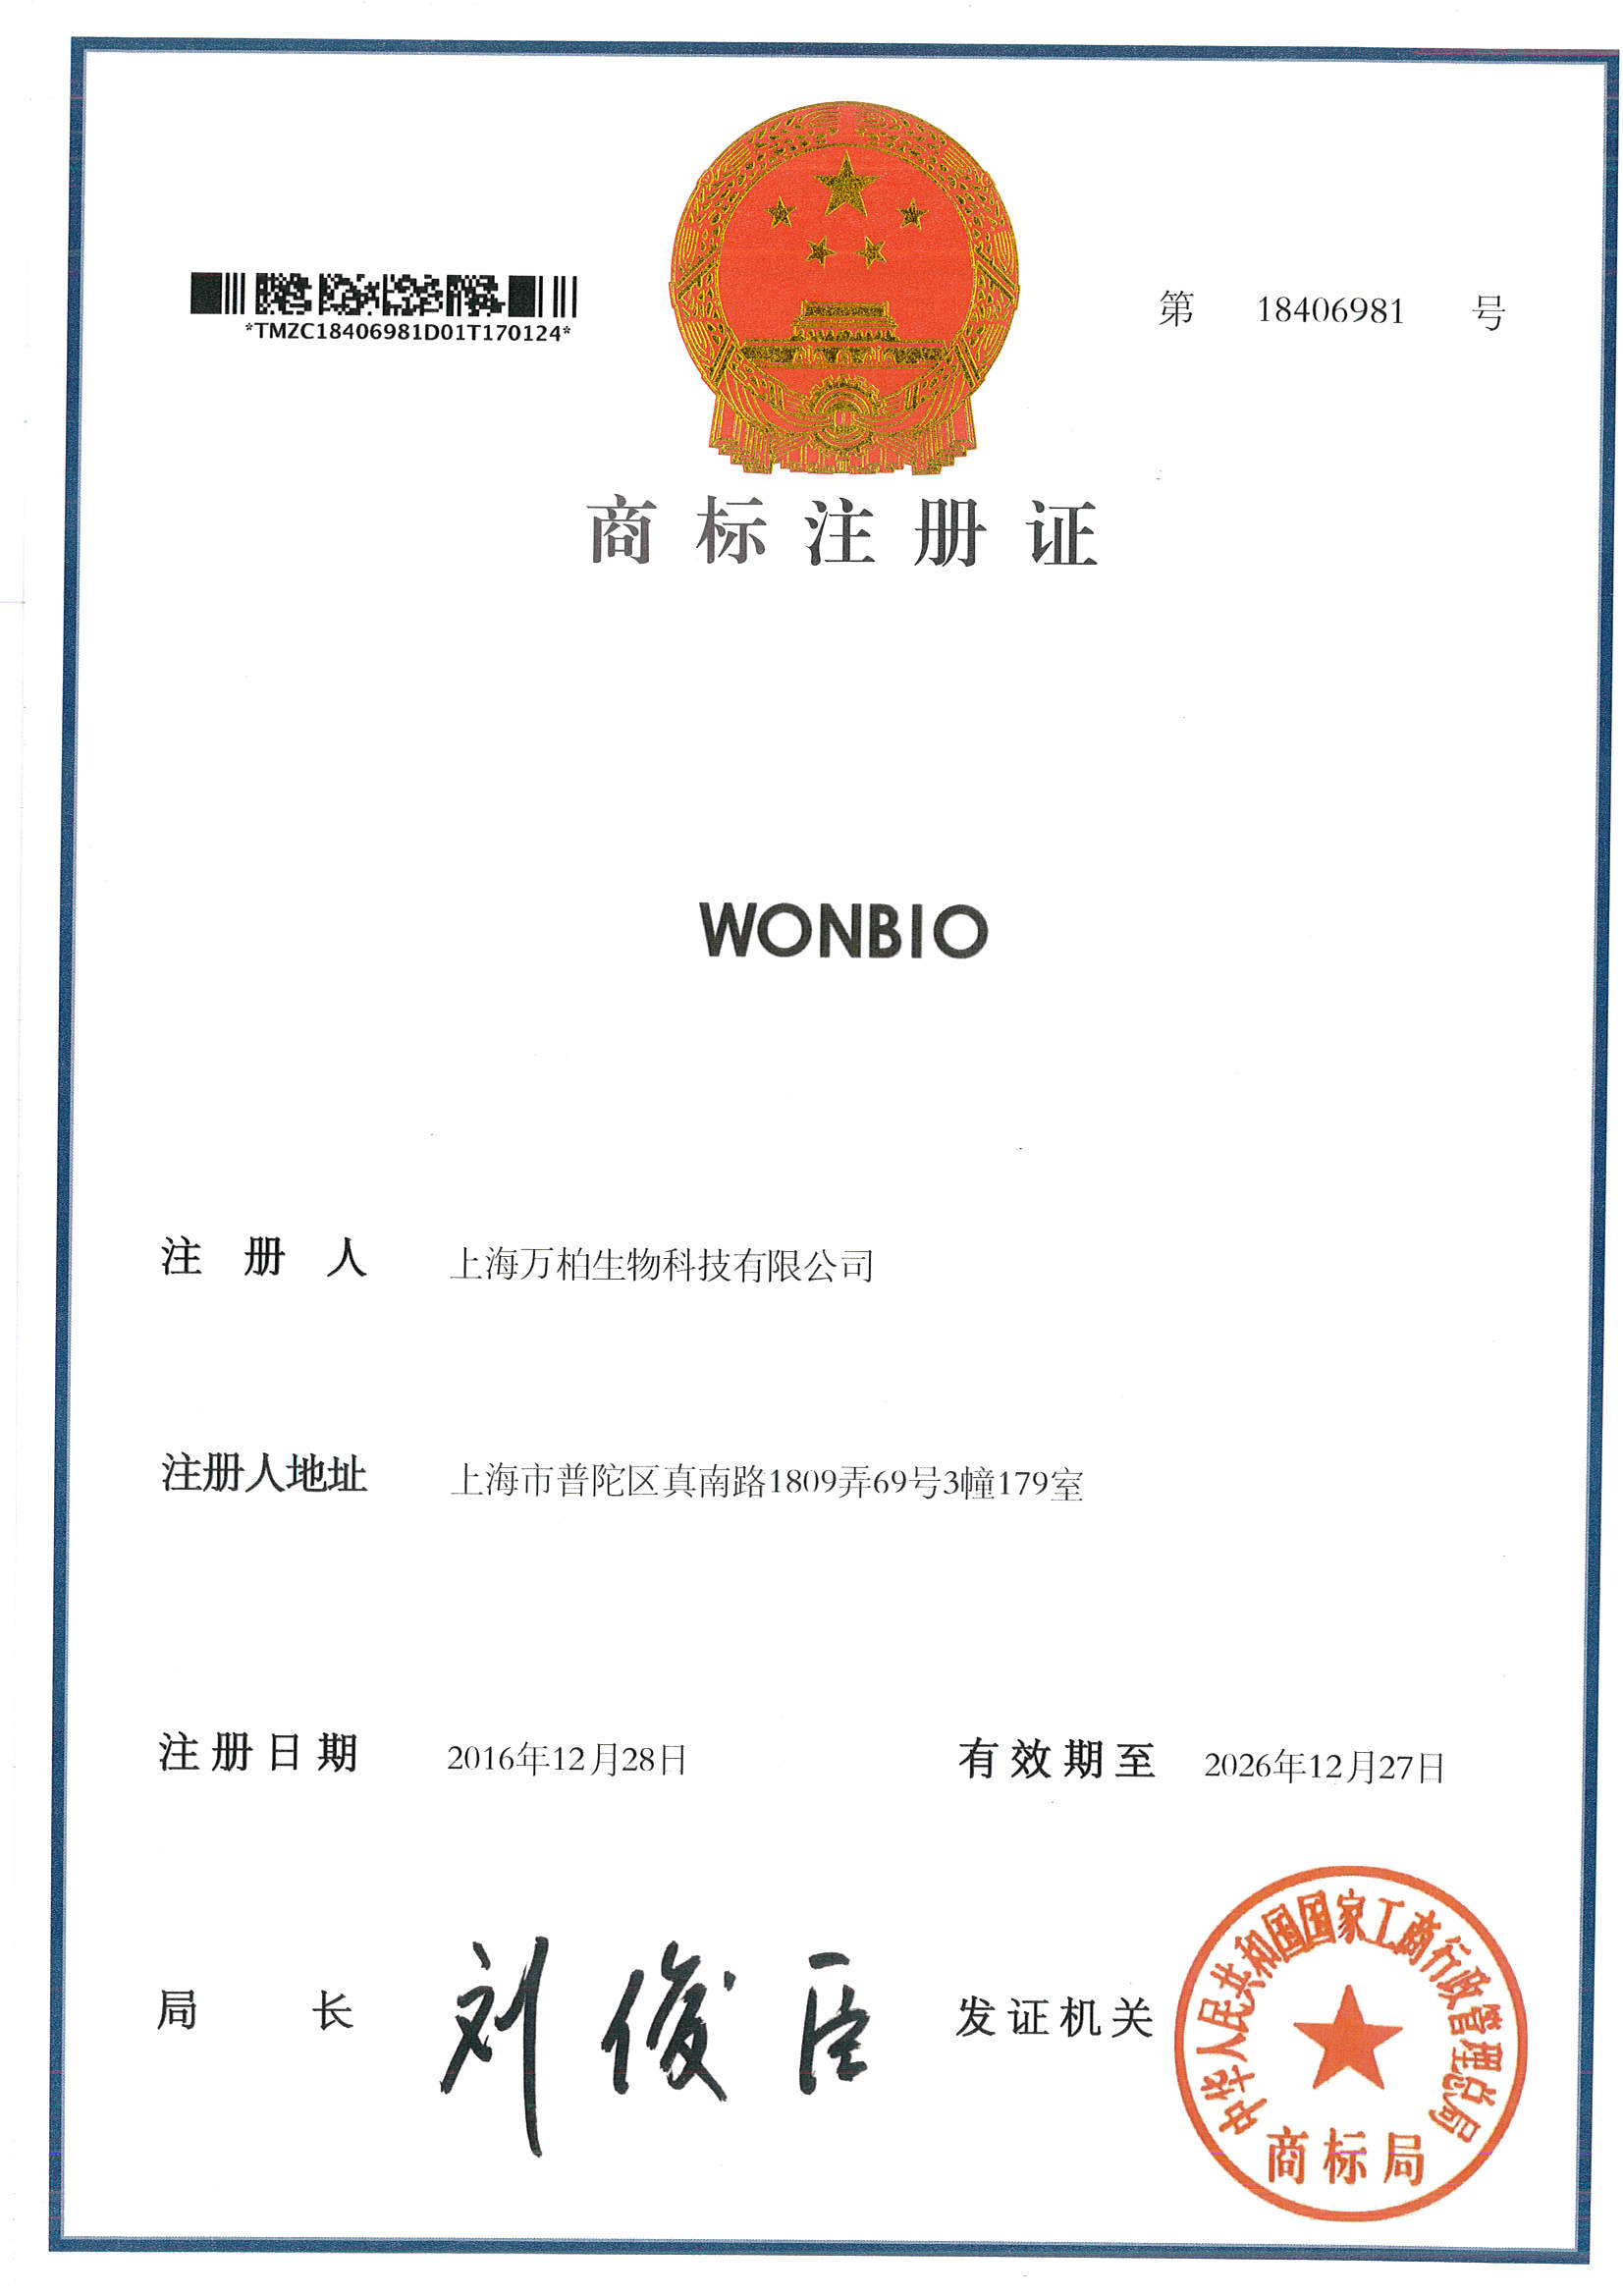 Statement - the wonbio trademark belongs to Shanghai Wanbai biology